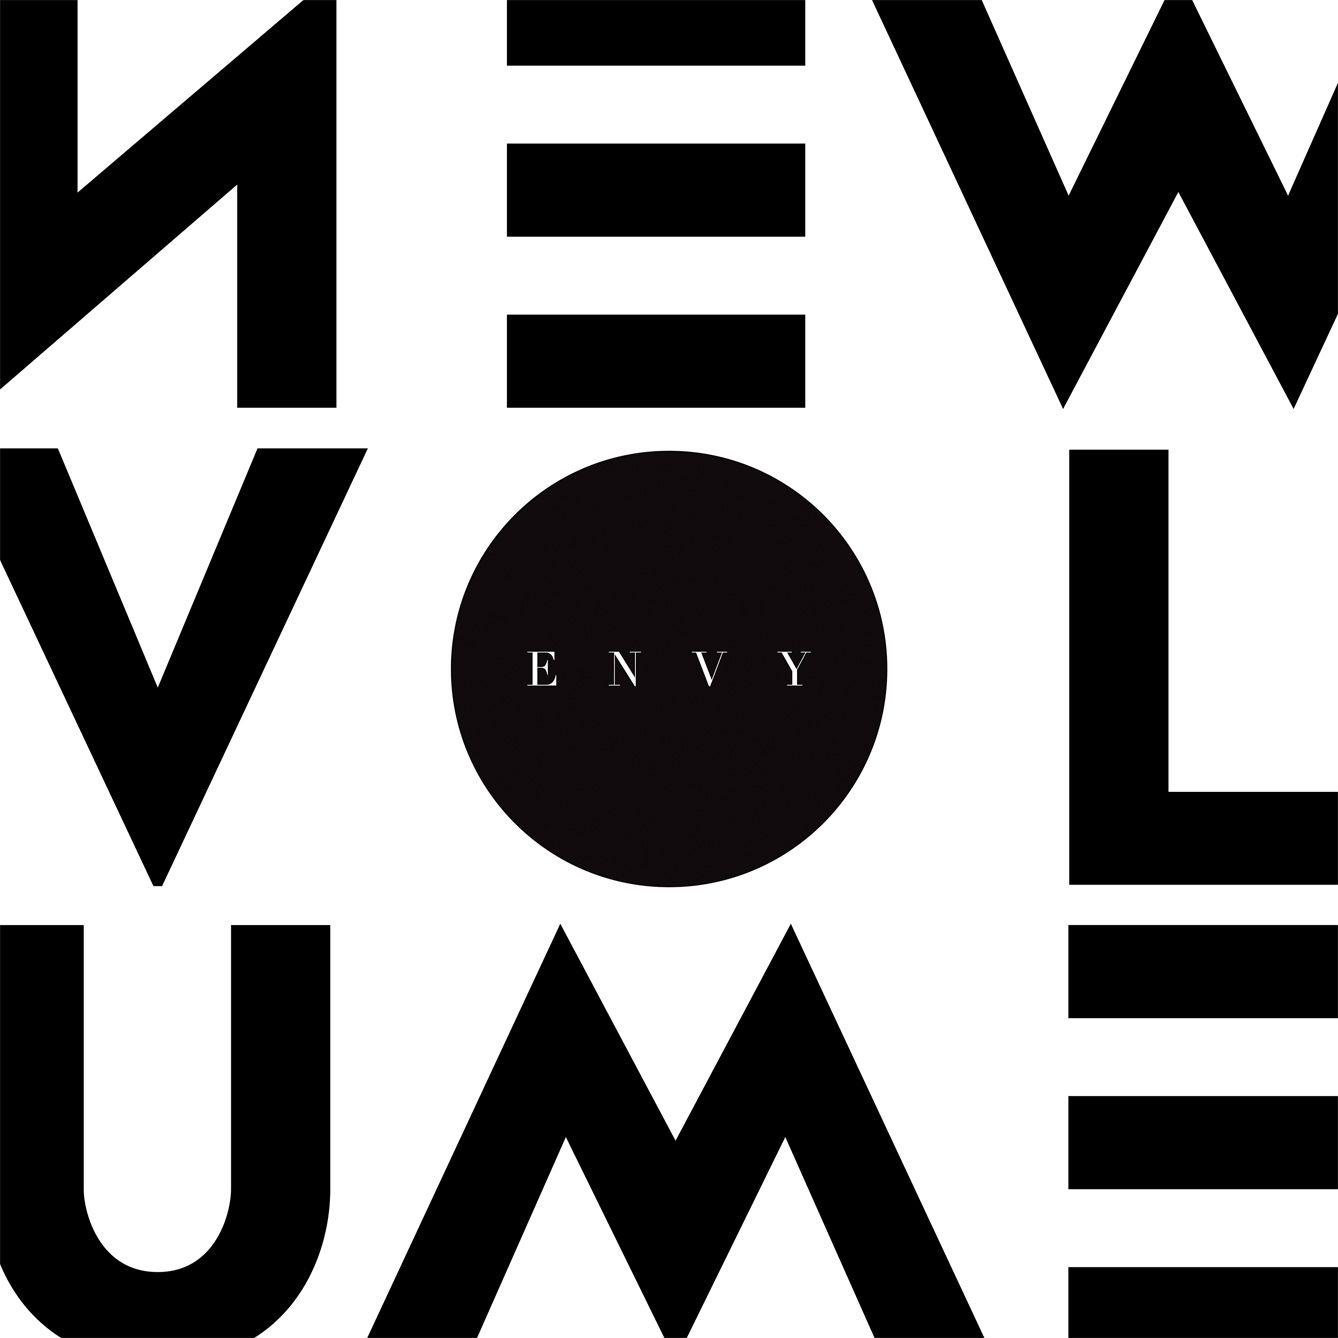 Volume Logo - New Volume – ENVY out now